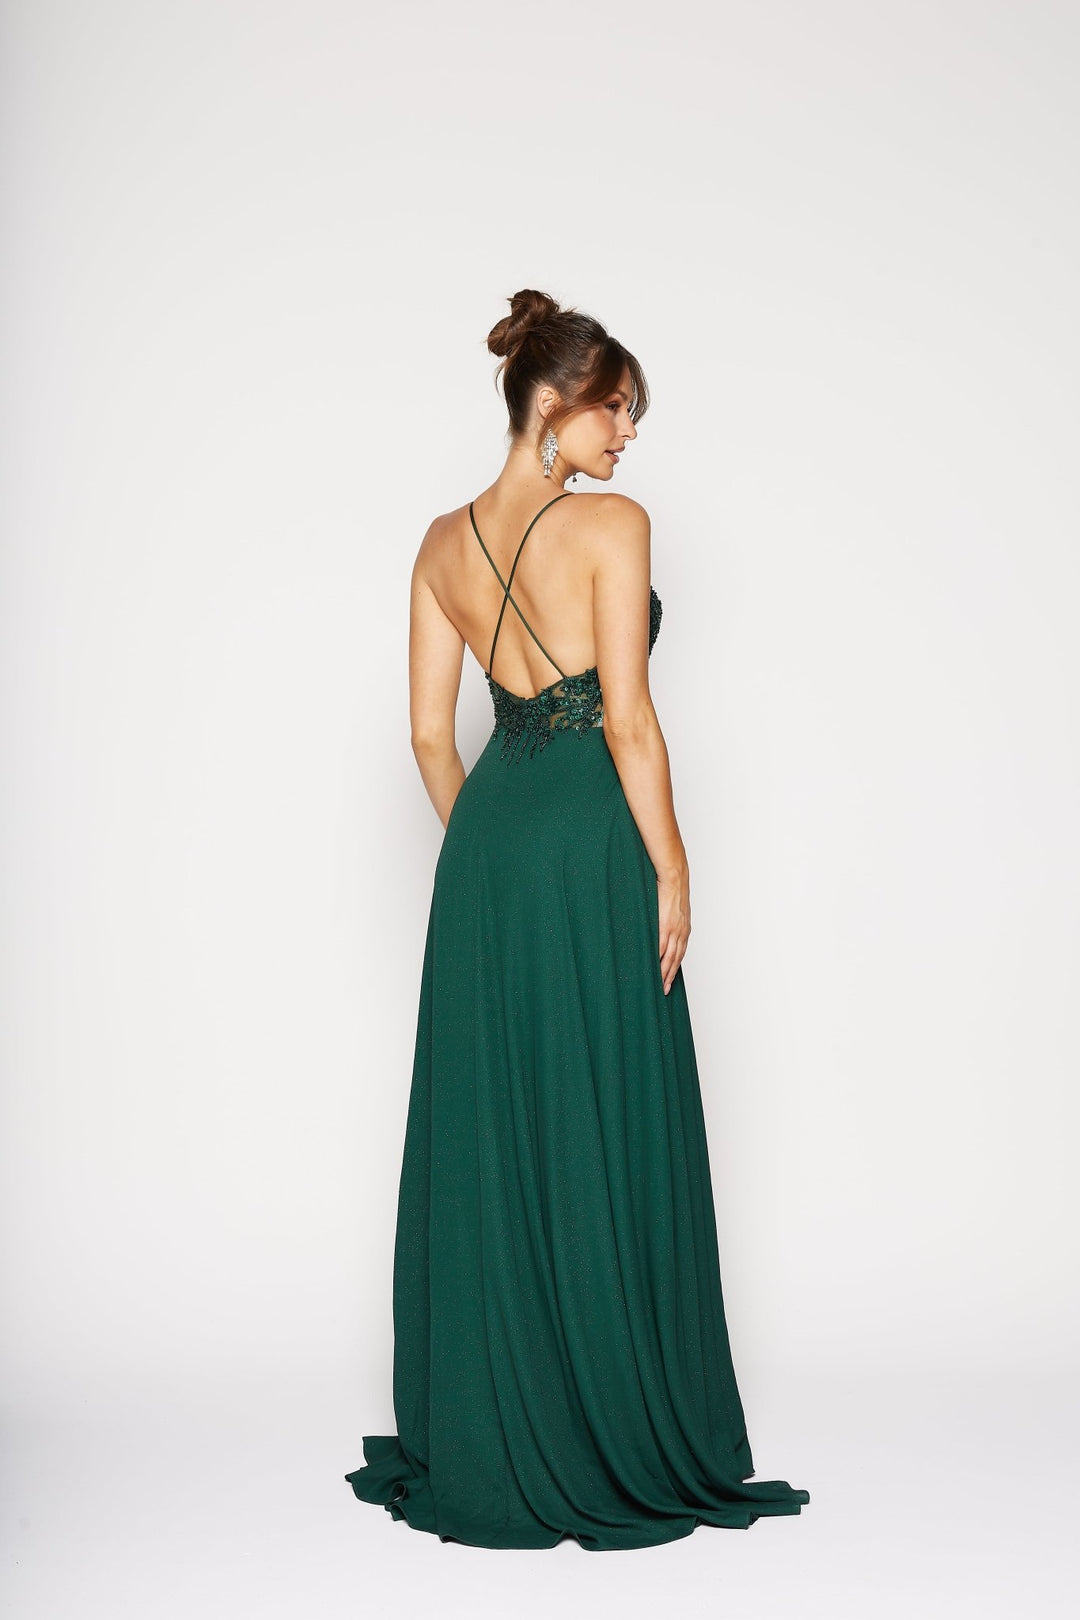 Dayla Dress by Tania Olsen PO2458 - ElissaJay Boutique